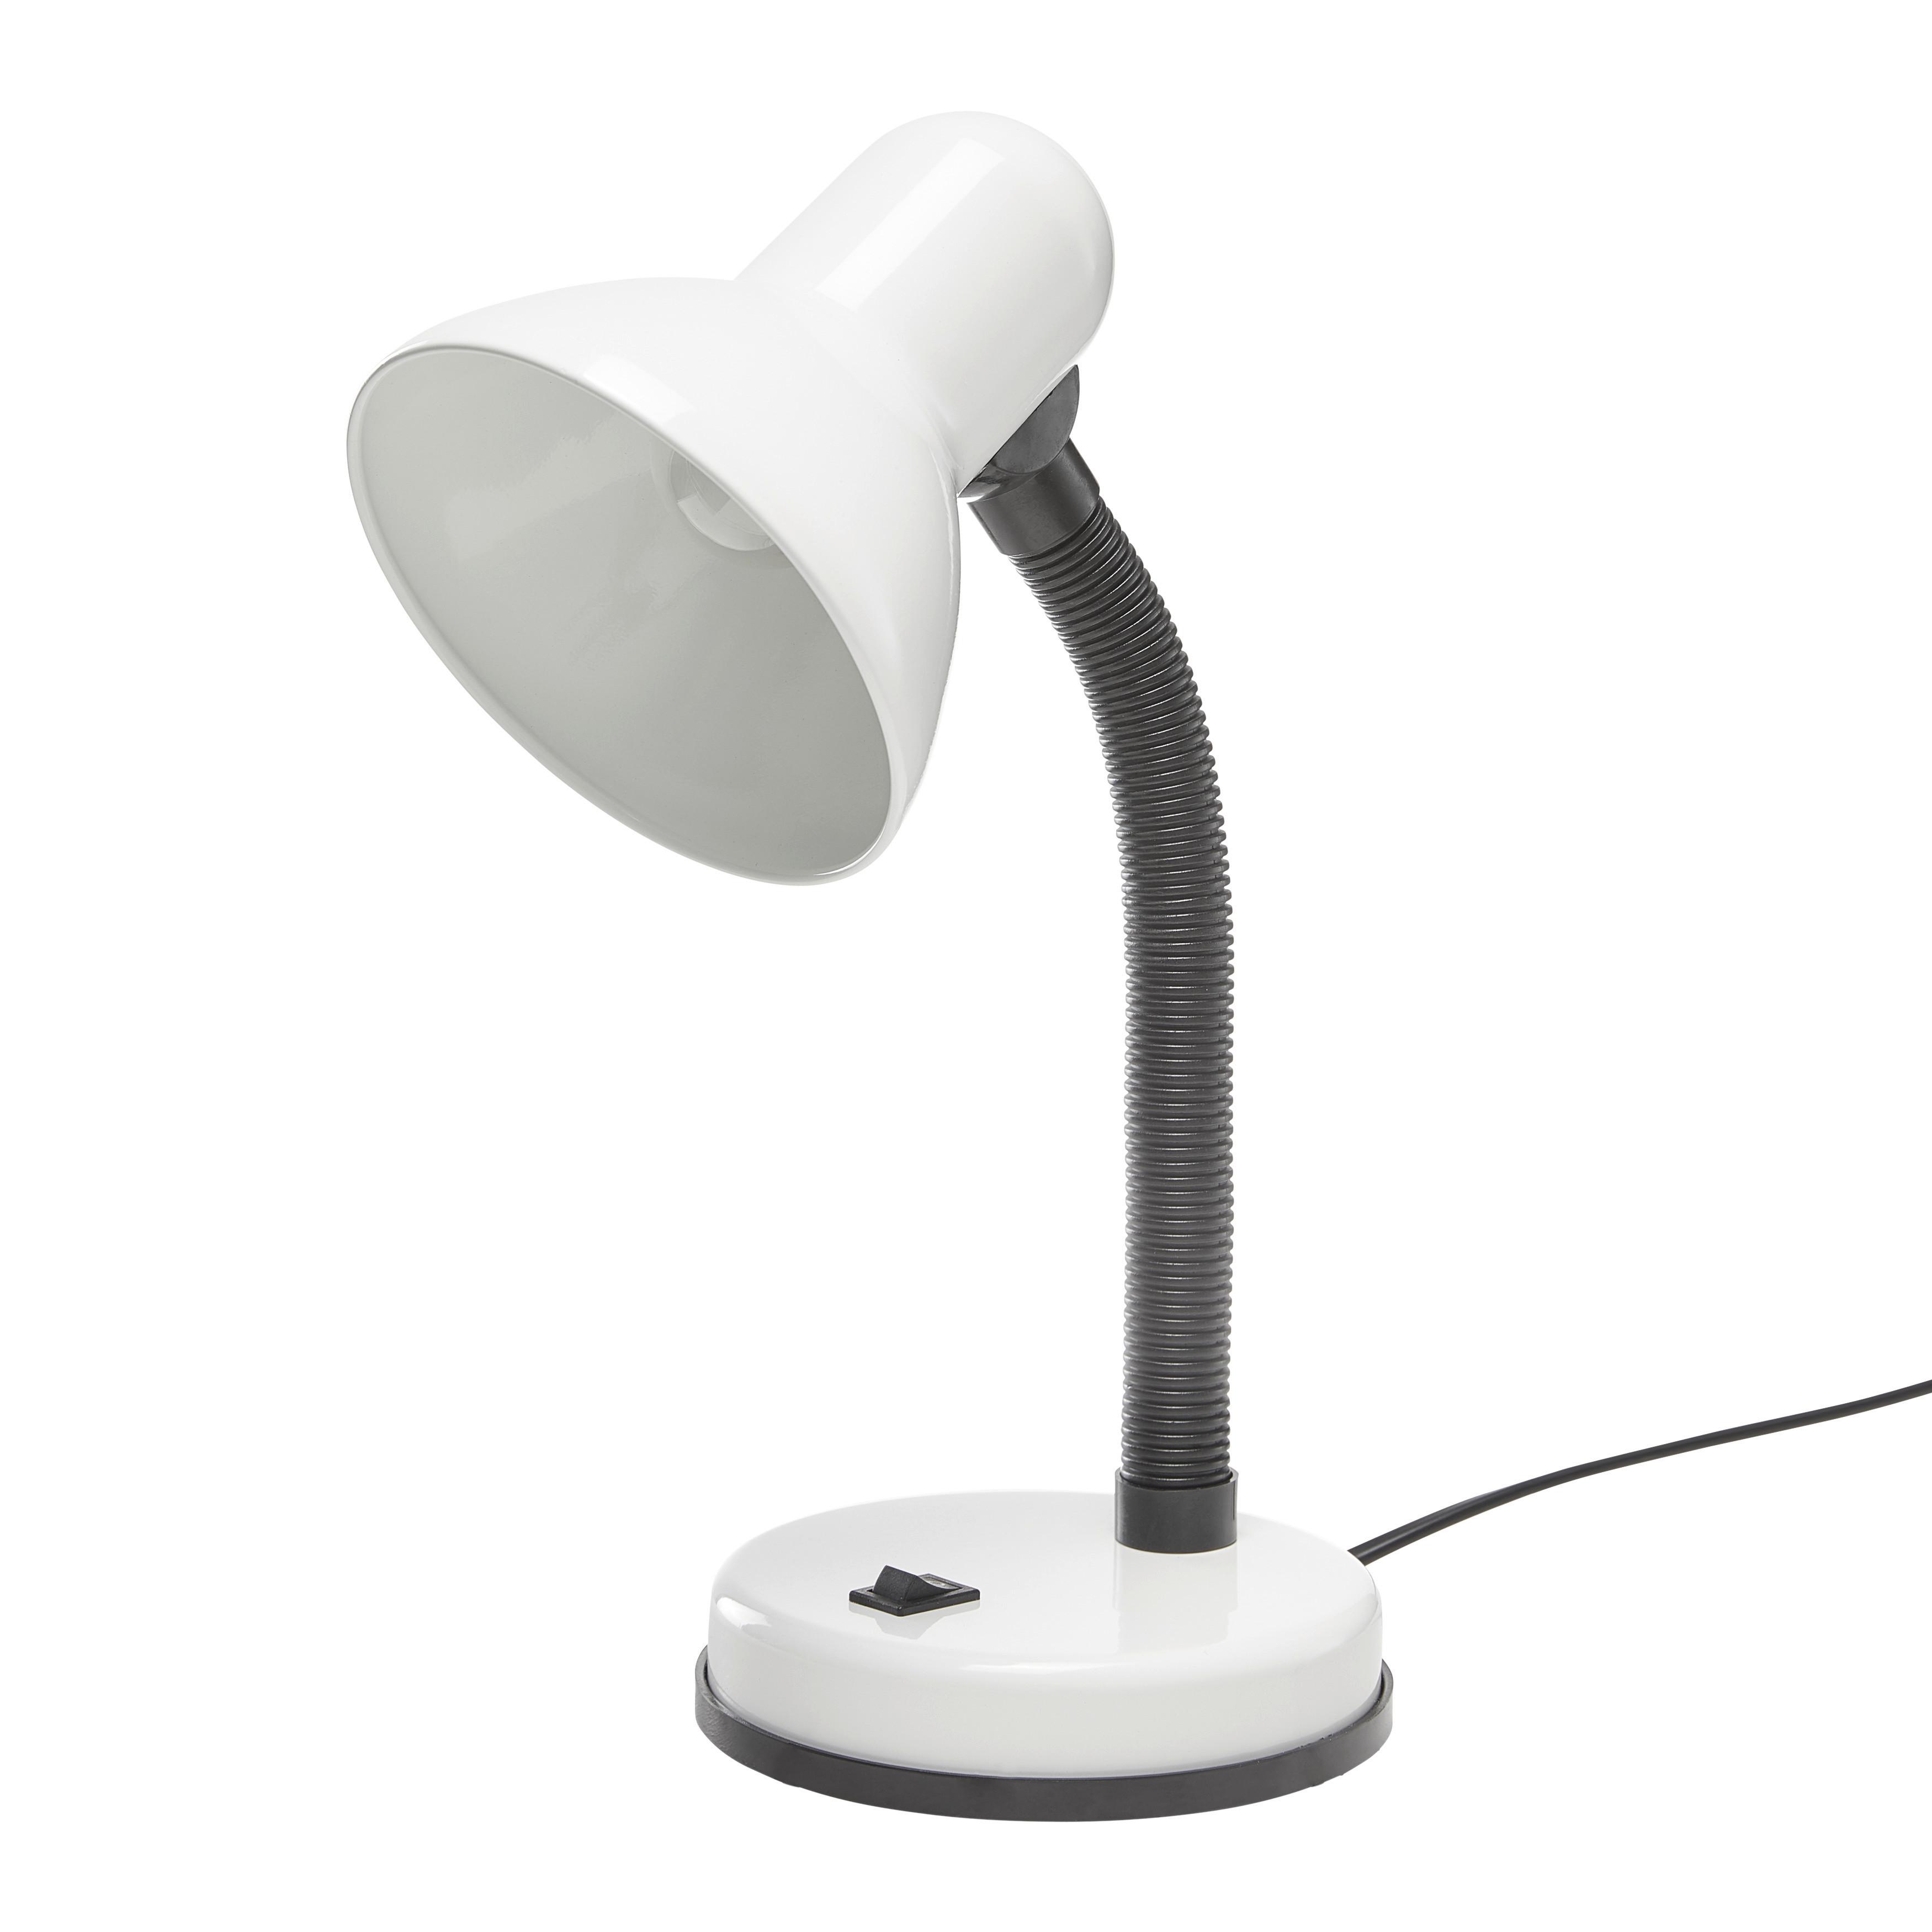 Lampa Na Psací Stůl Leona Max. 40 Watt Cenový Trhák - bílá, kov/plast (14,5cm) - Modern Living